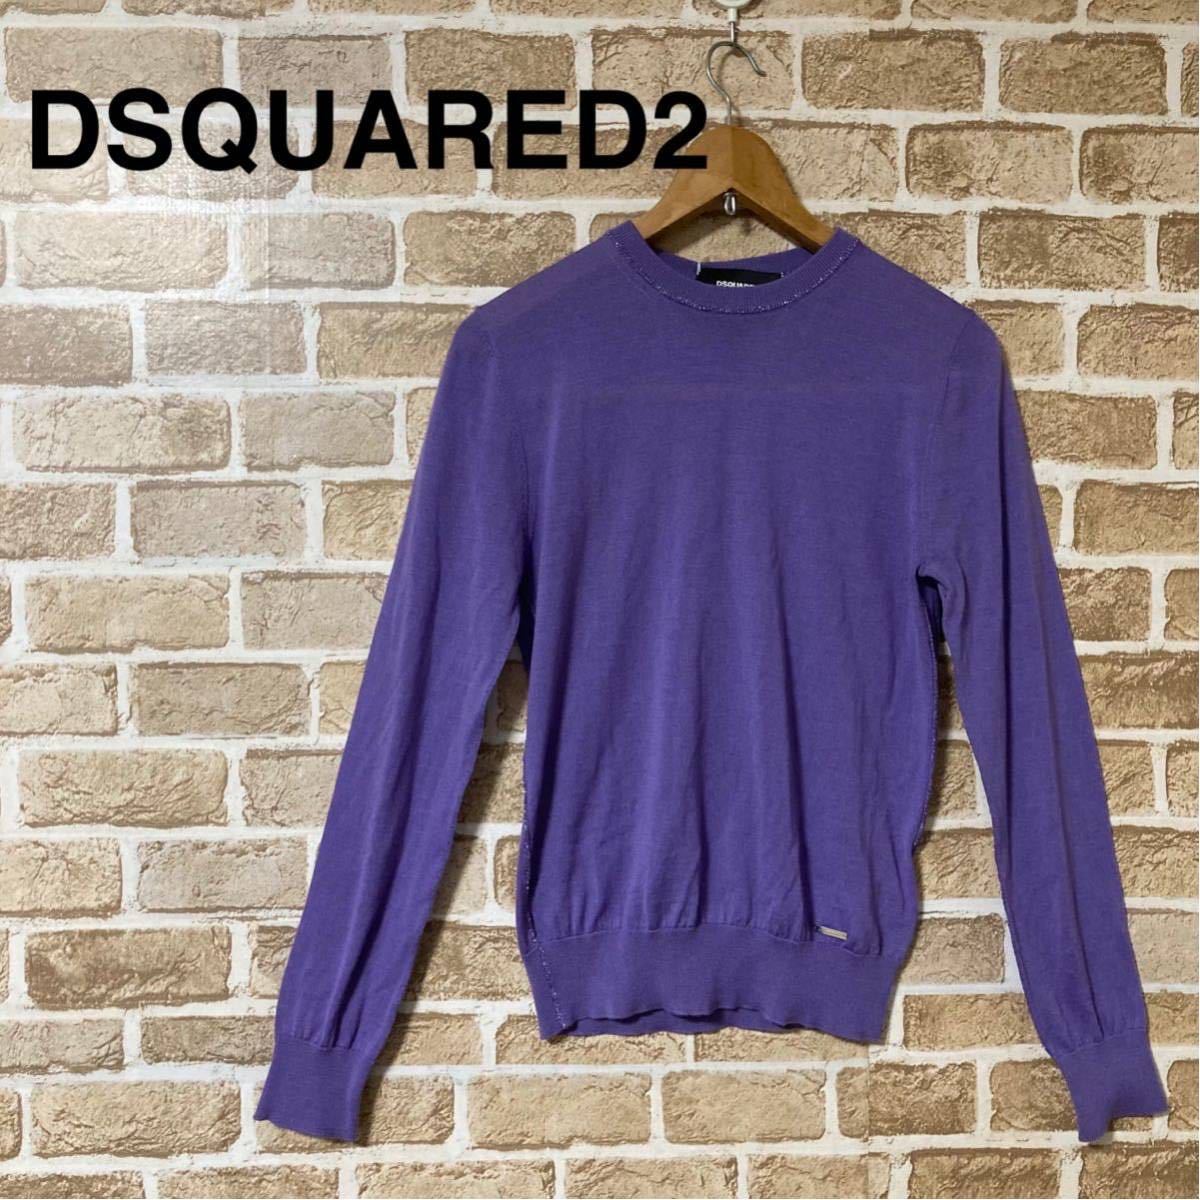 DSQUARED2 ディースクエアード ニット セーター パープル 紫 新品